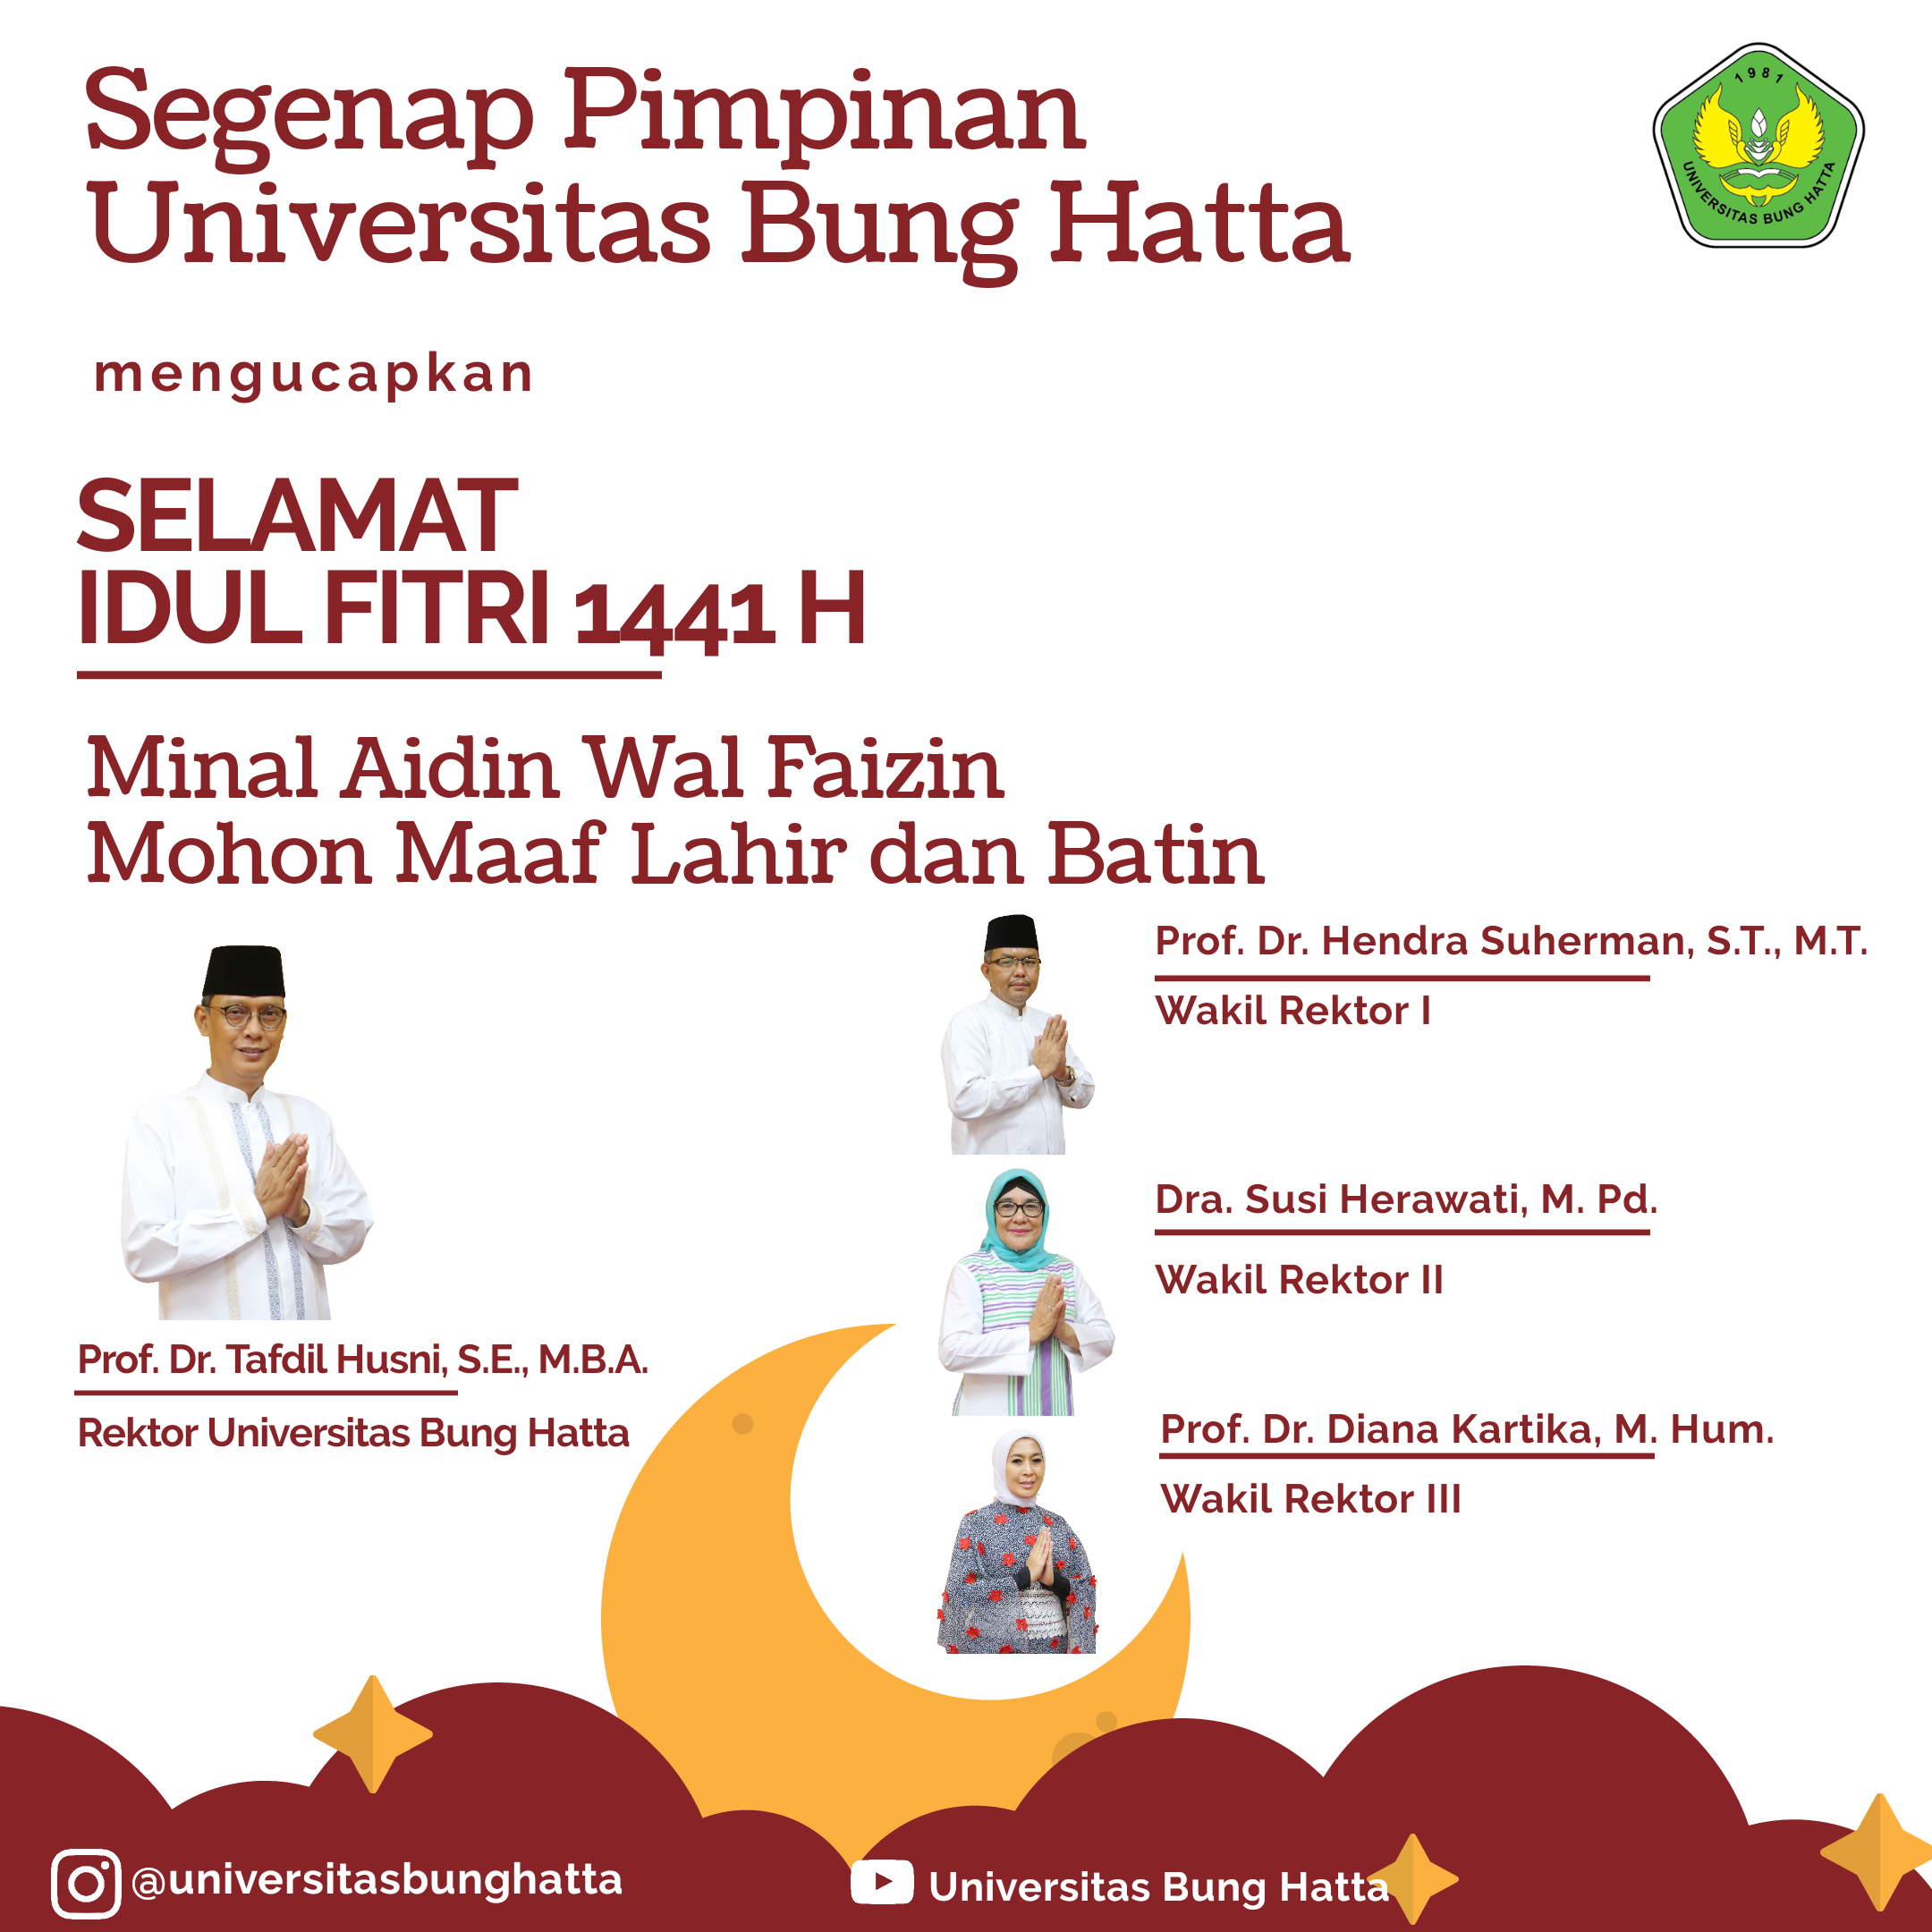 Segenap Jajaran Pimpinan Universitas Bung Hatta Mengucapkan Selamat Hari Raya Idul Fitri 1441 H